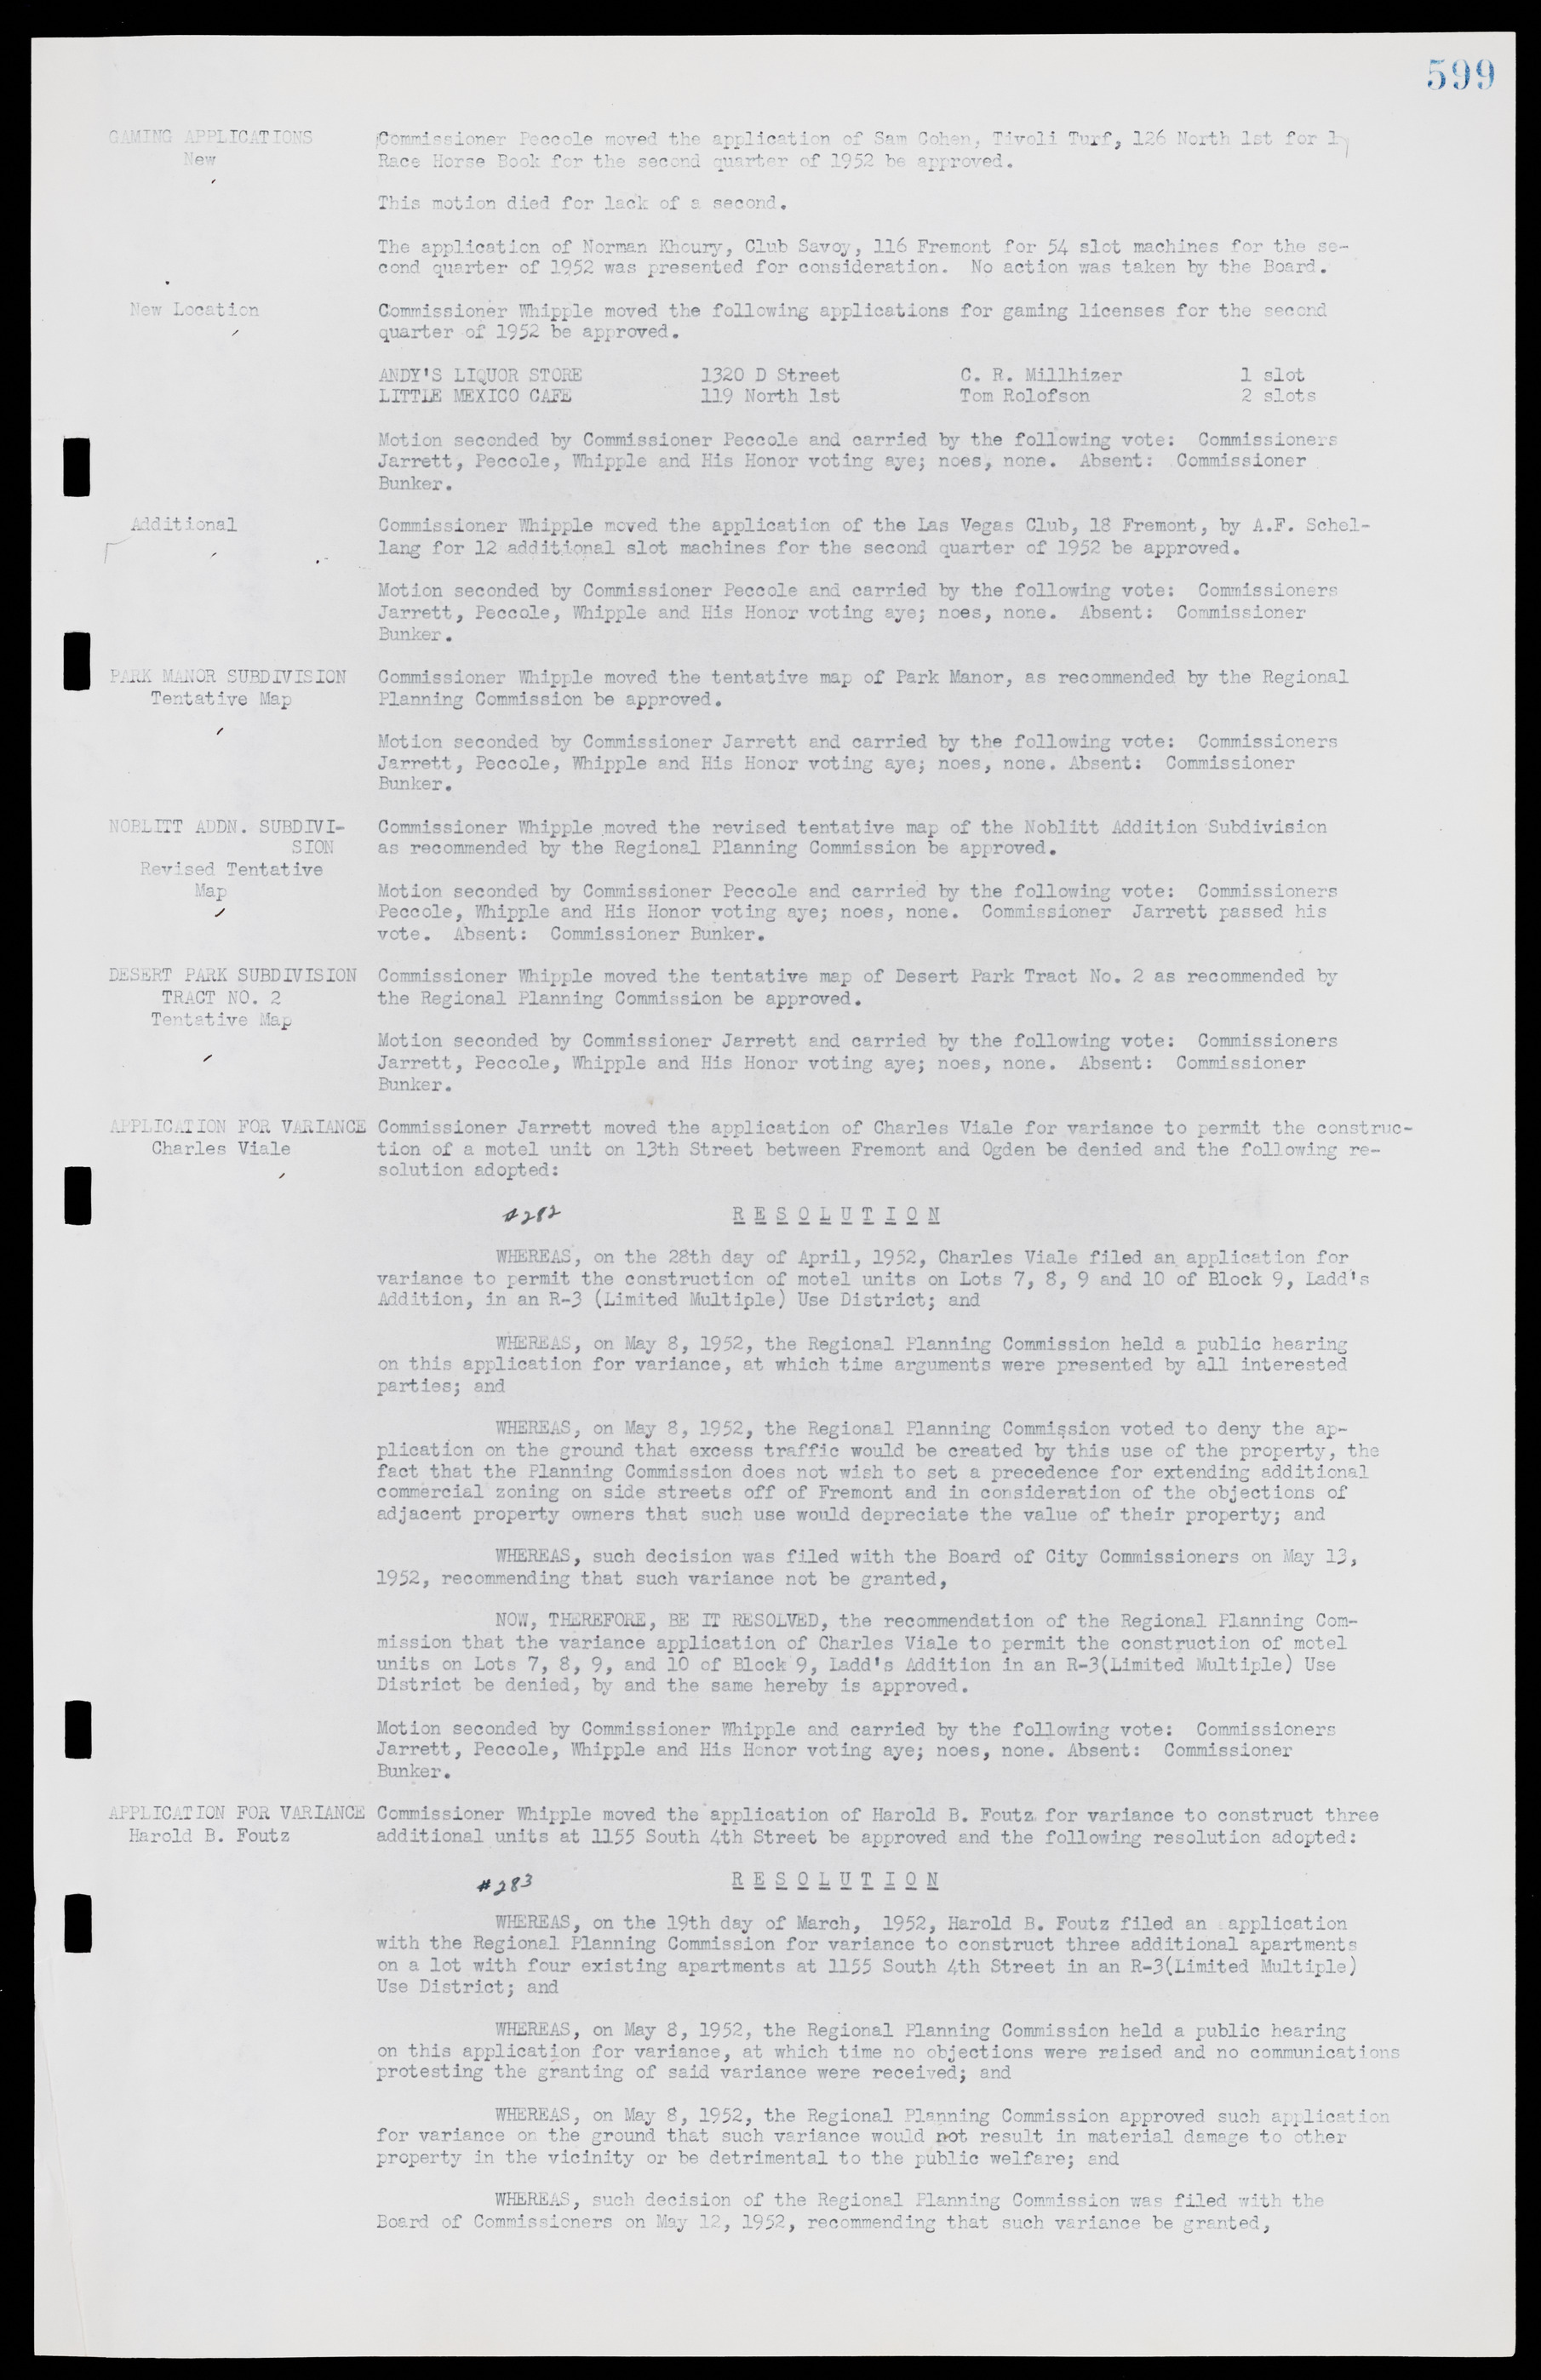 Las Vegas City Commission Minutes, November 7, 1949 to May 21, 1952, lvc000007-617